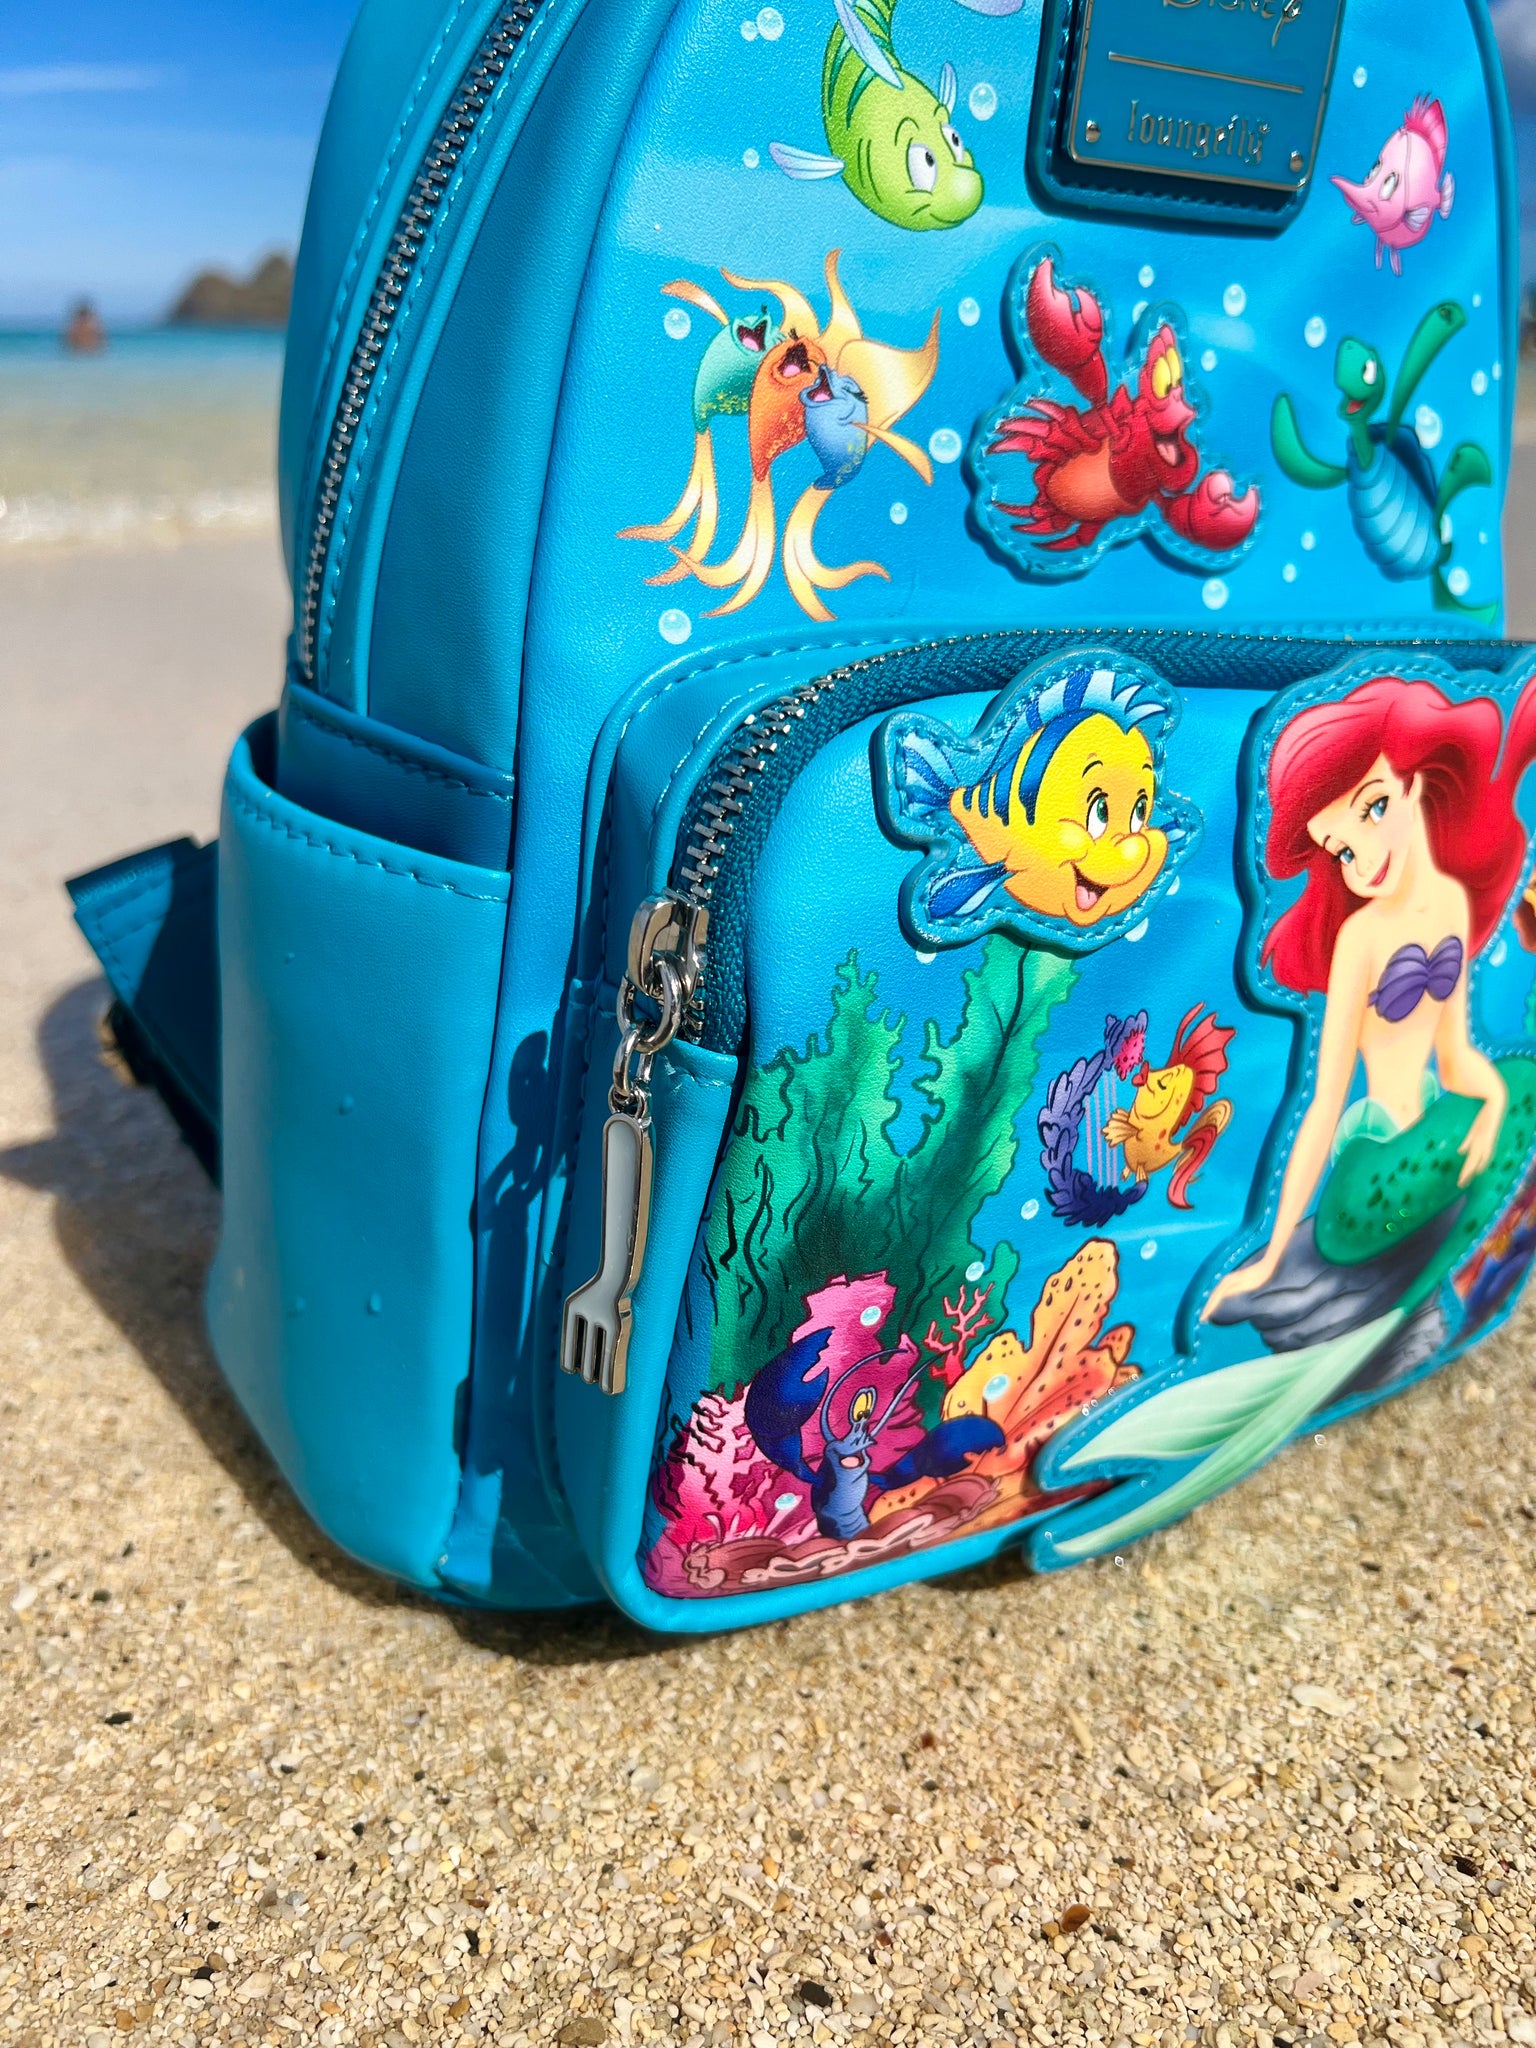 Loungefly Little Mermaid Backpack - Ariel,  Exclusive Disney